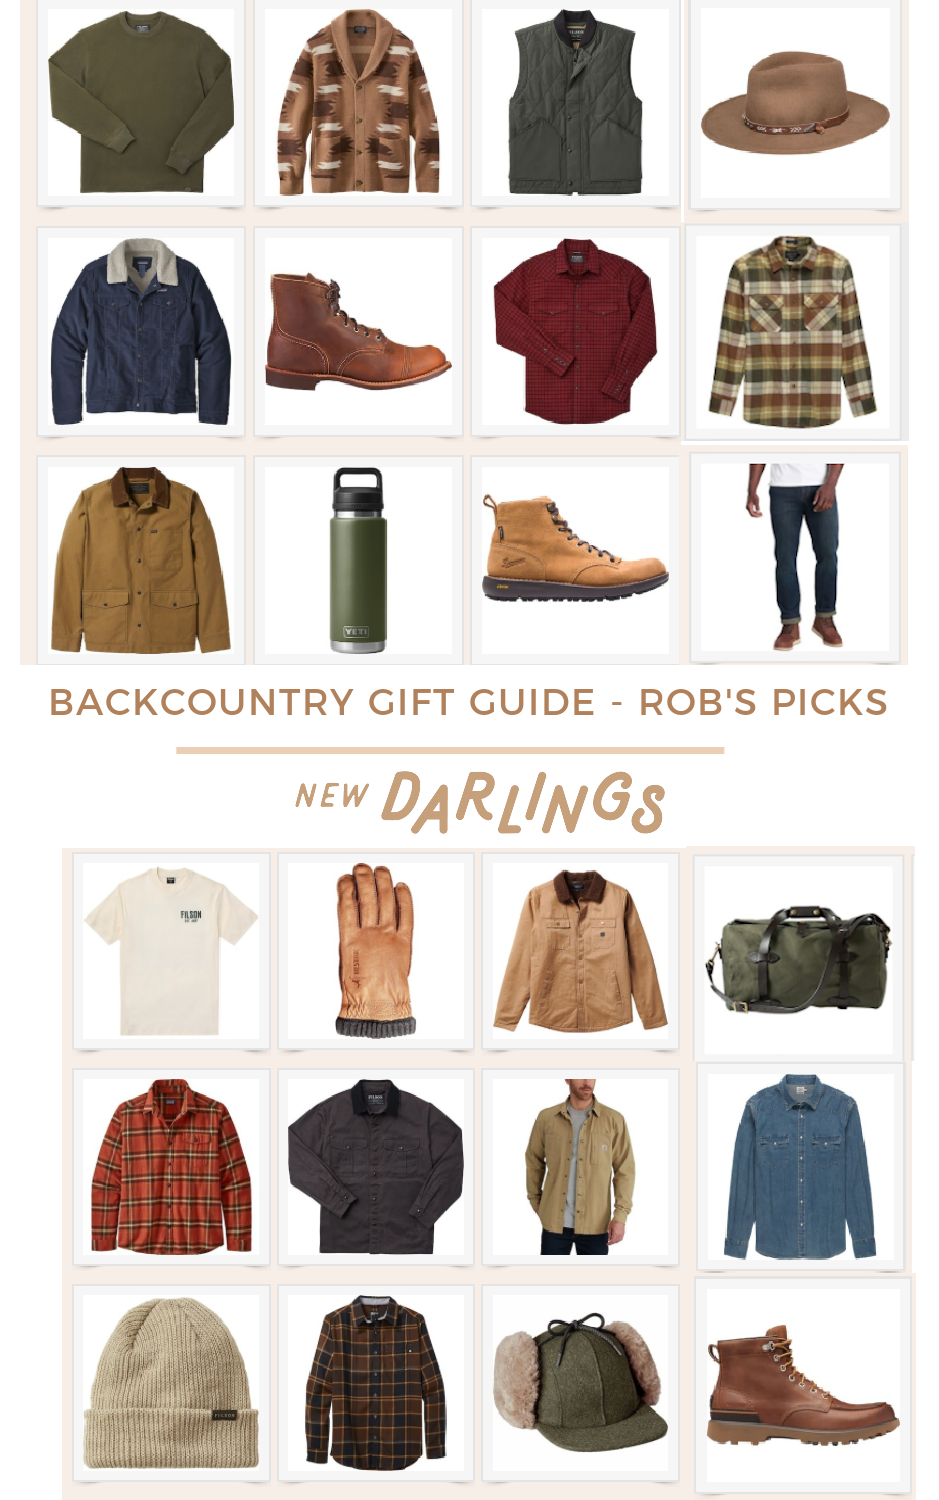 Backcountry gift guide